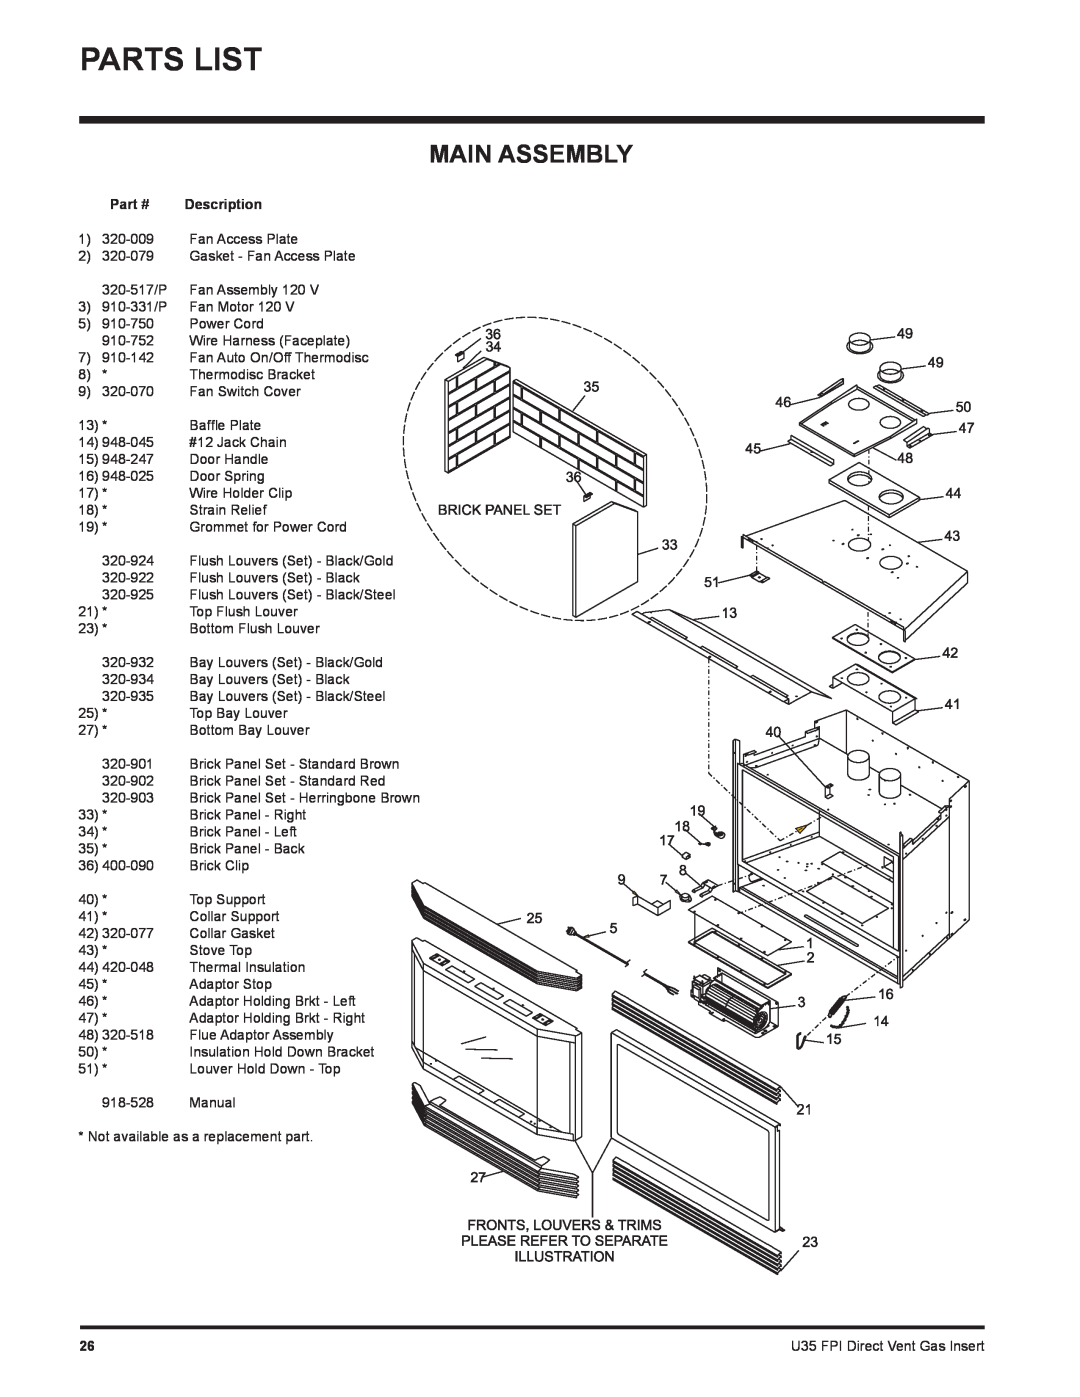 Regency U35-NG1, U35-LP1 installation manual Parts List, Main Assembly, U35 FPI Direct Vent Gas Insert 